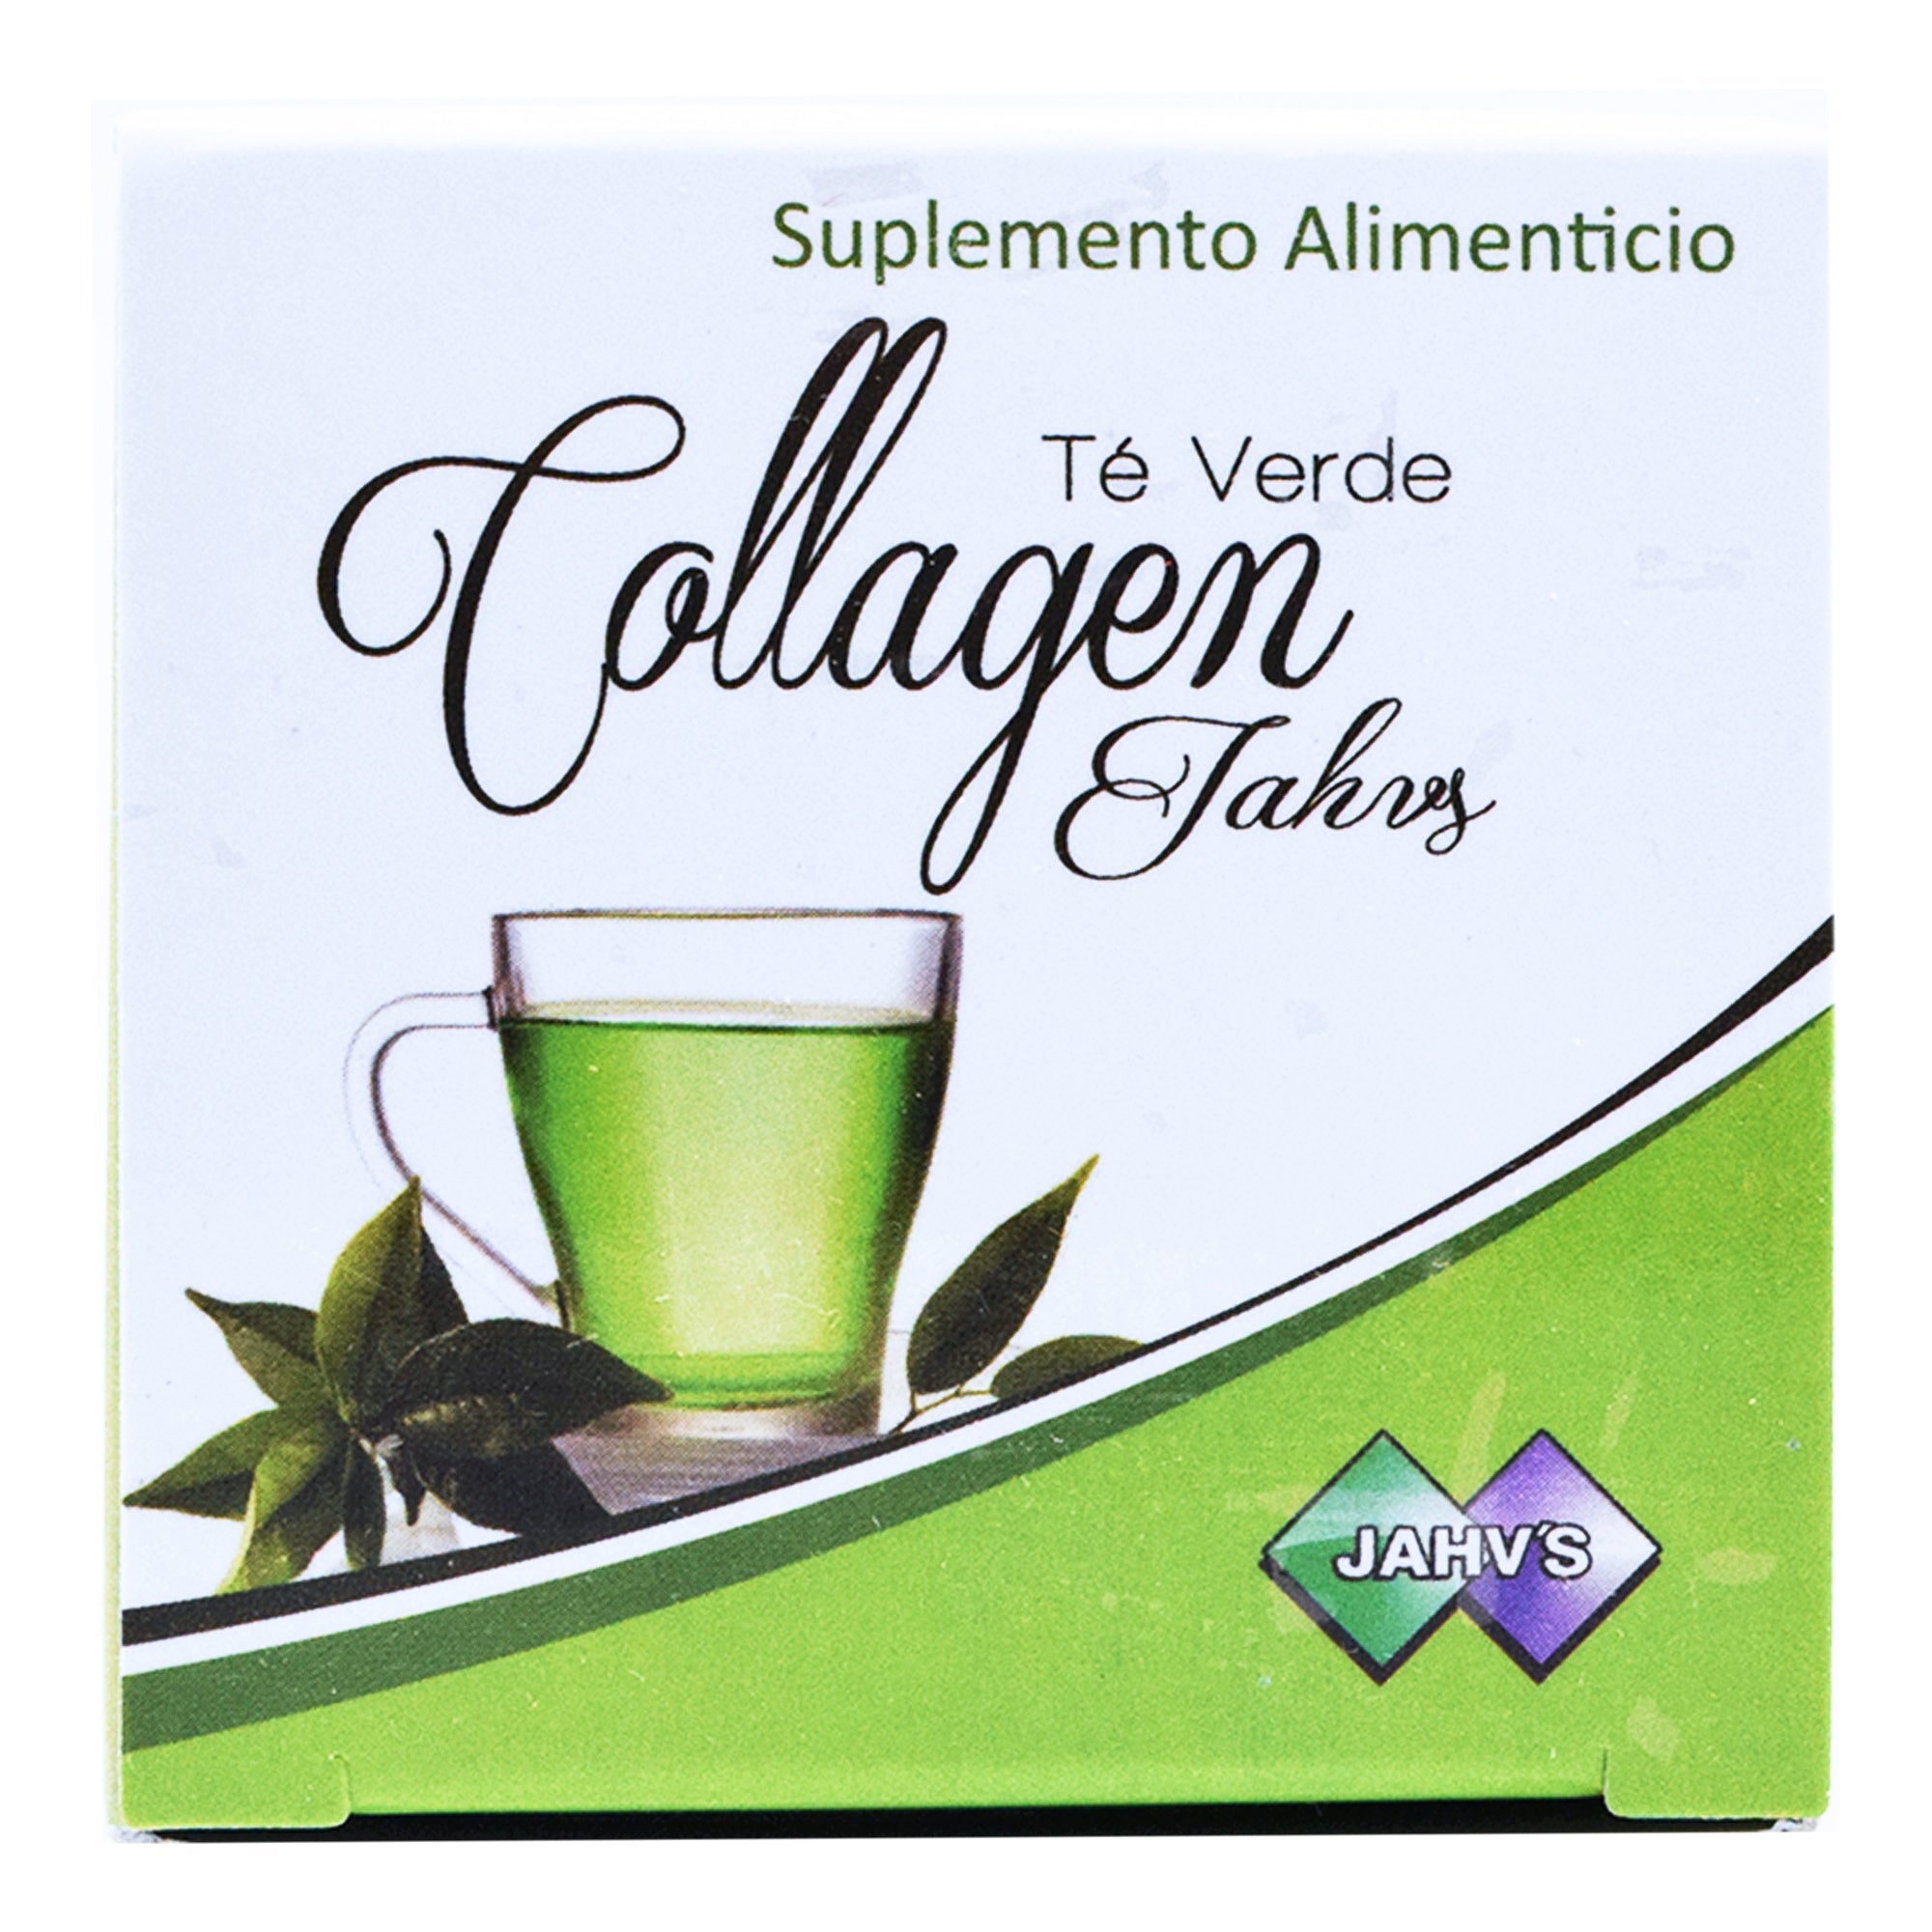 Colageno Collagen Te Verde-Limon 60 Tab